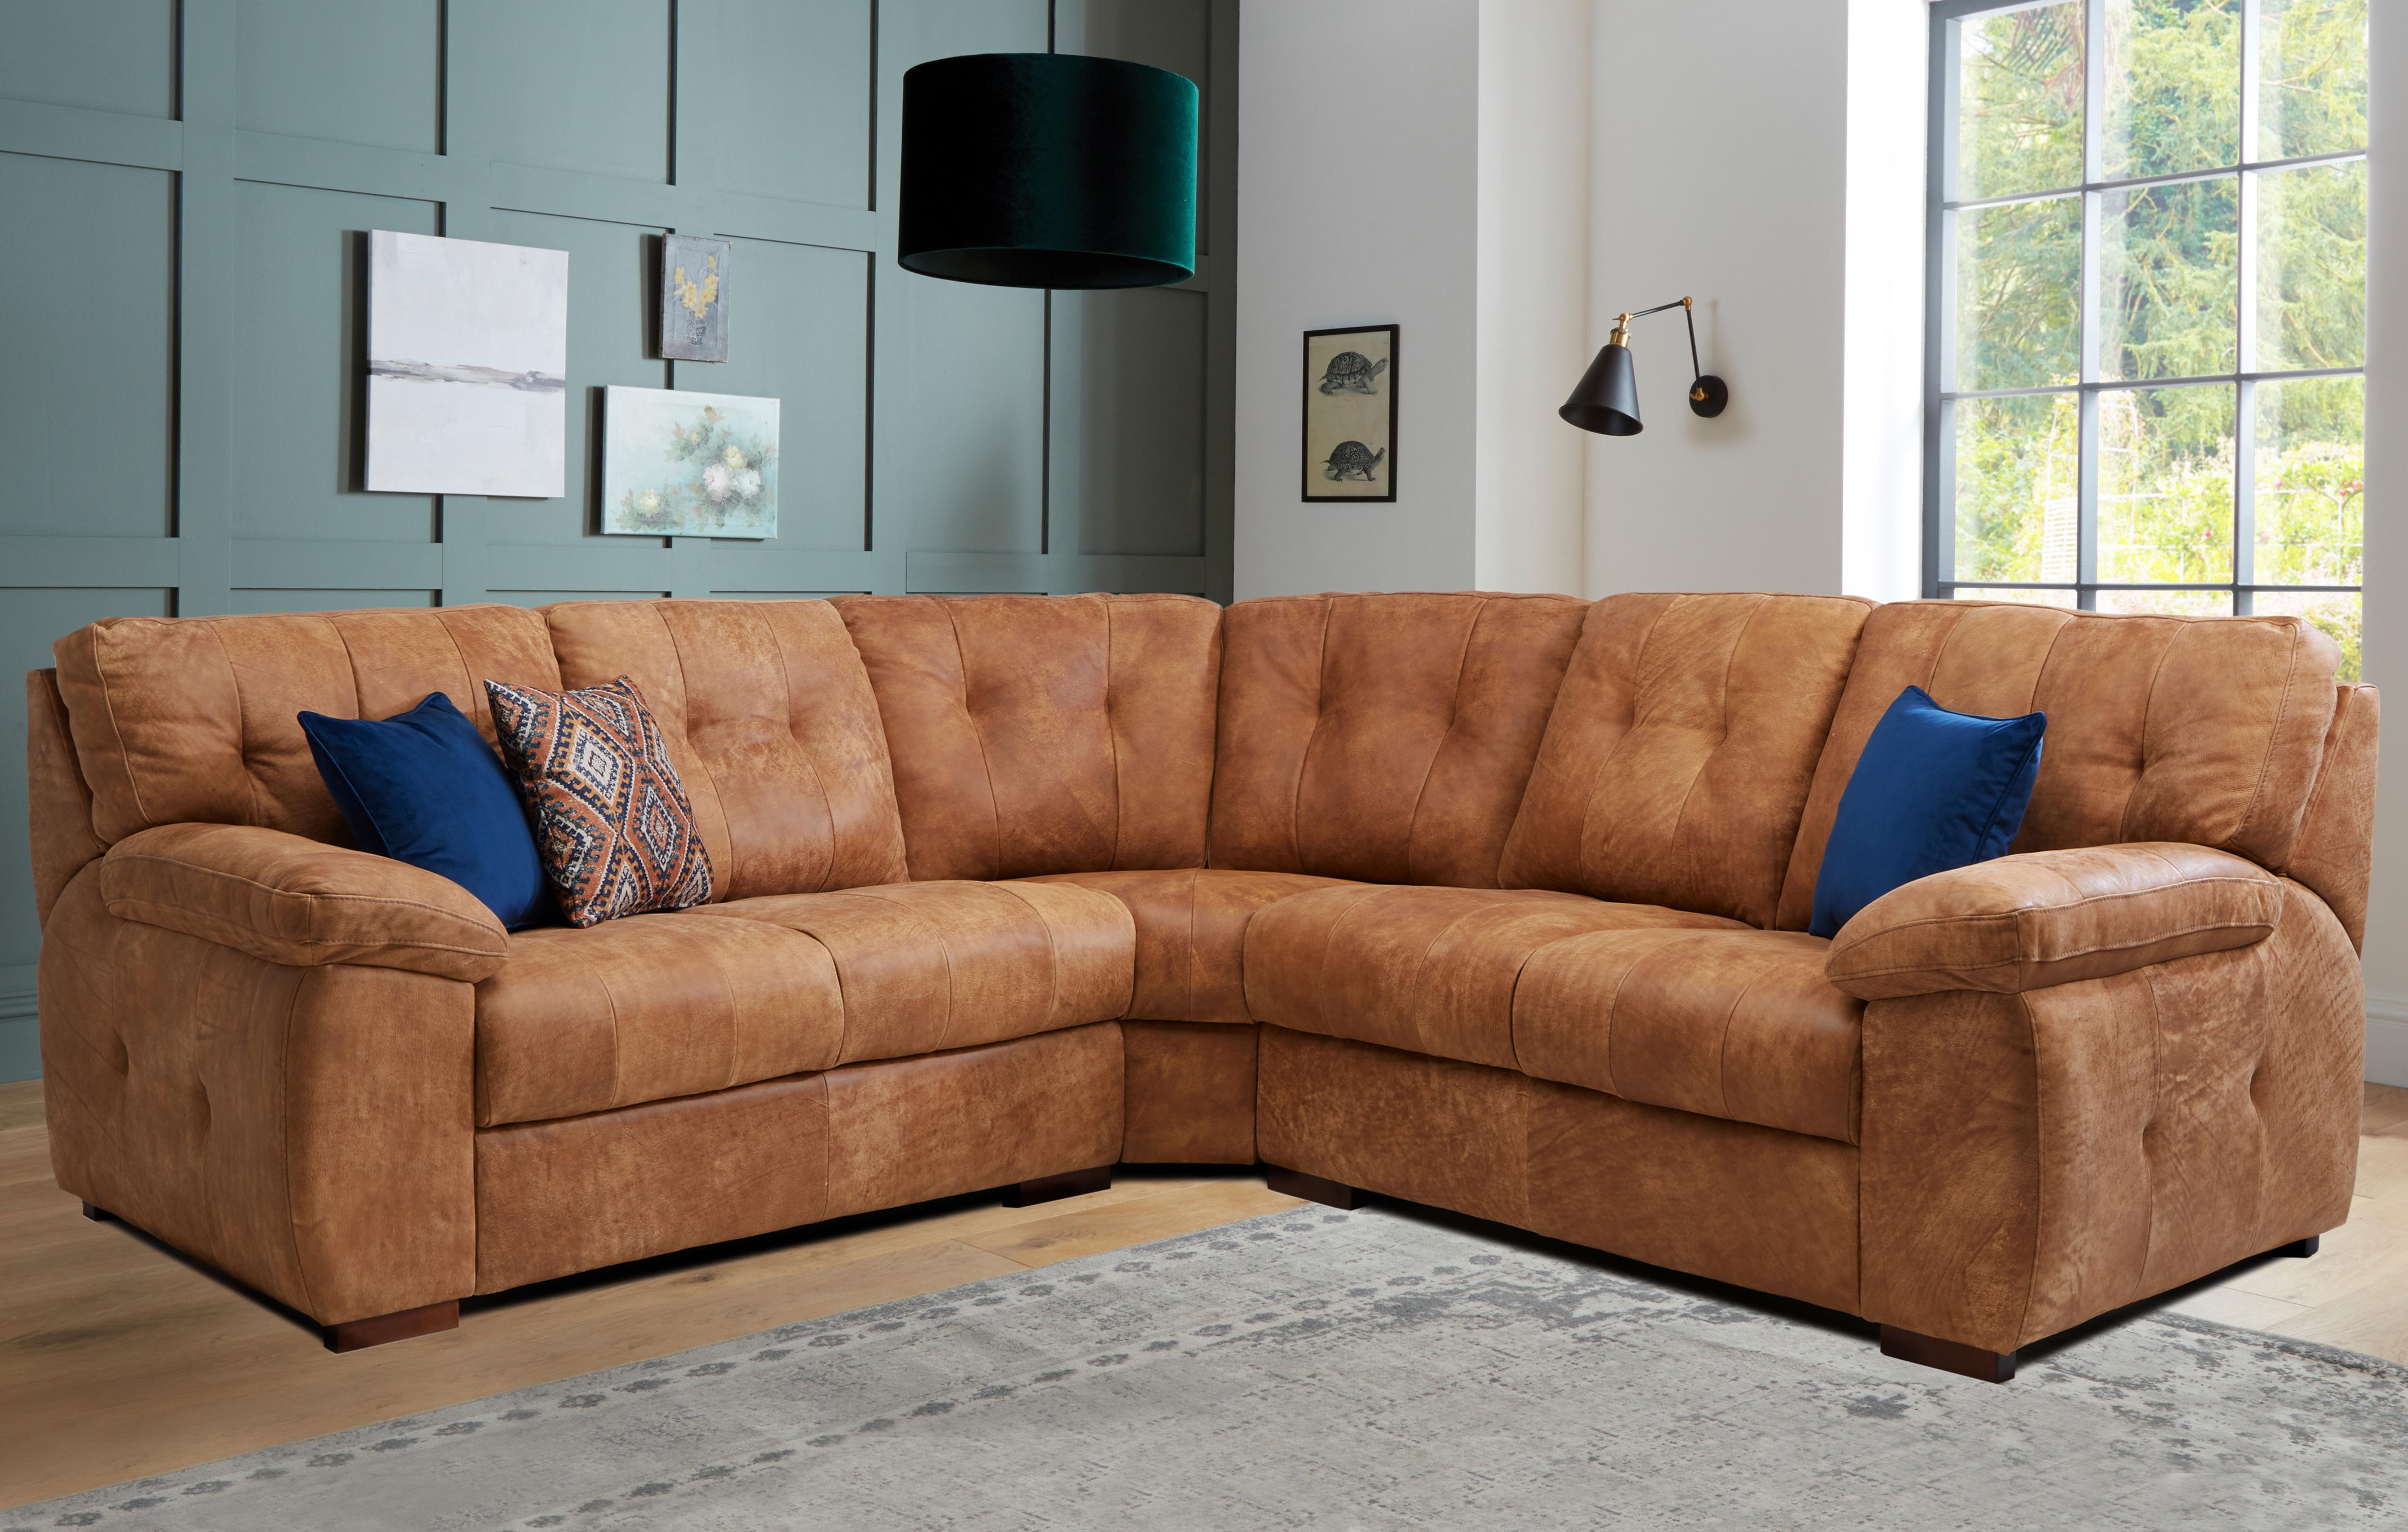 alfiler si puedes arpón Leather Corner Sofas That Combine Quality & Value | DFS